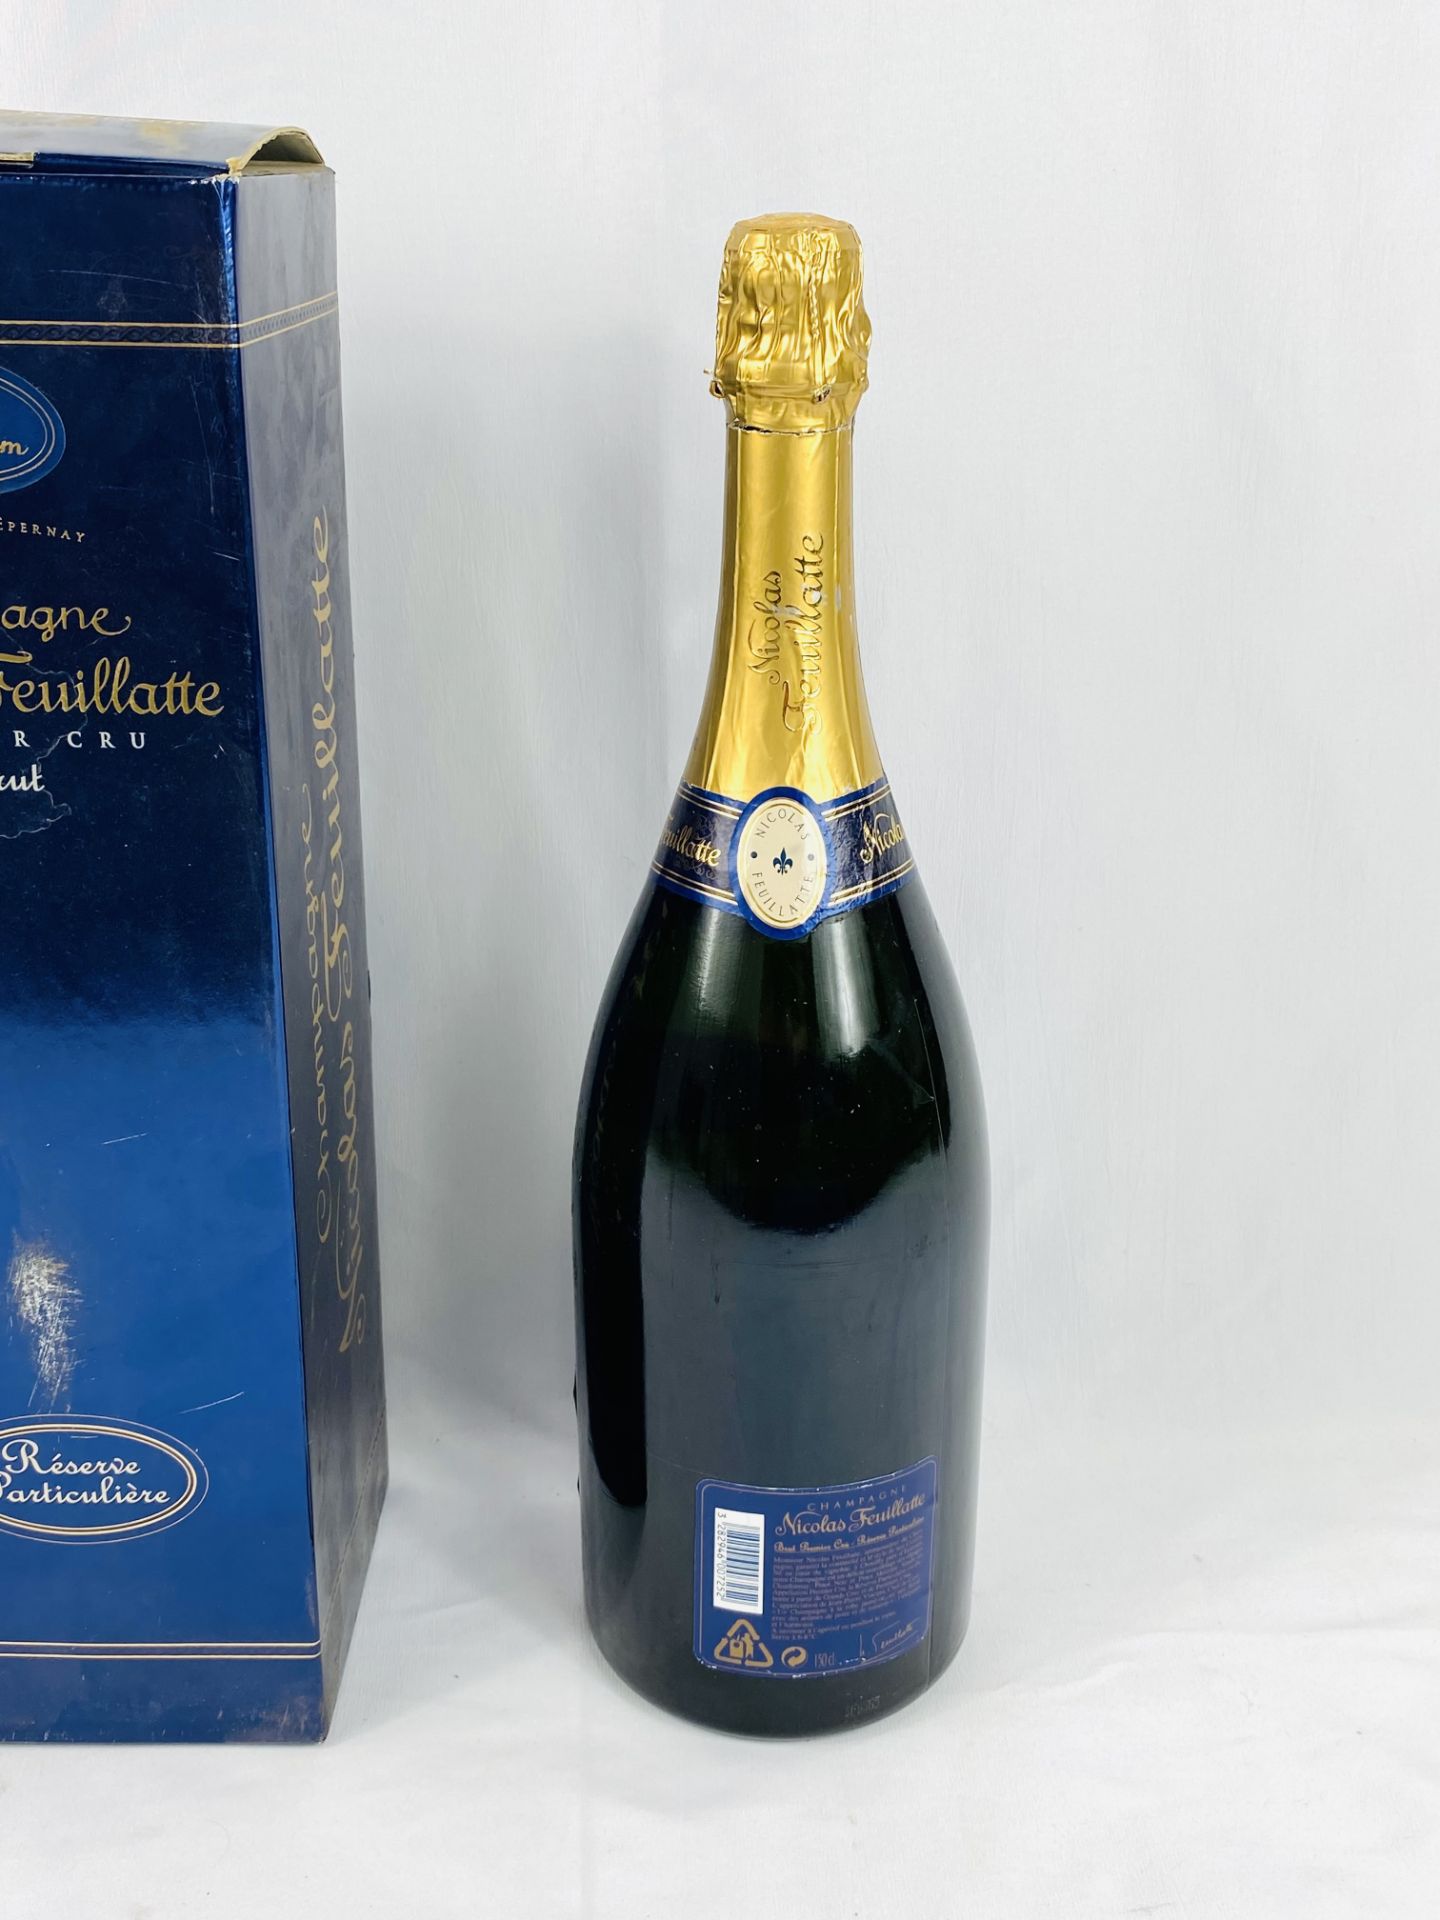 Nicolas Feuillatte Premier cru champagne - Image 3 of 4